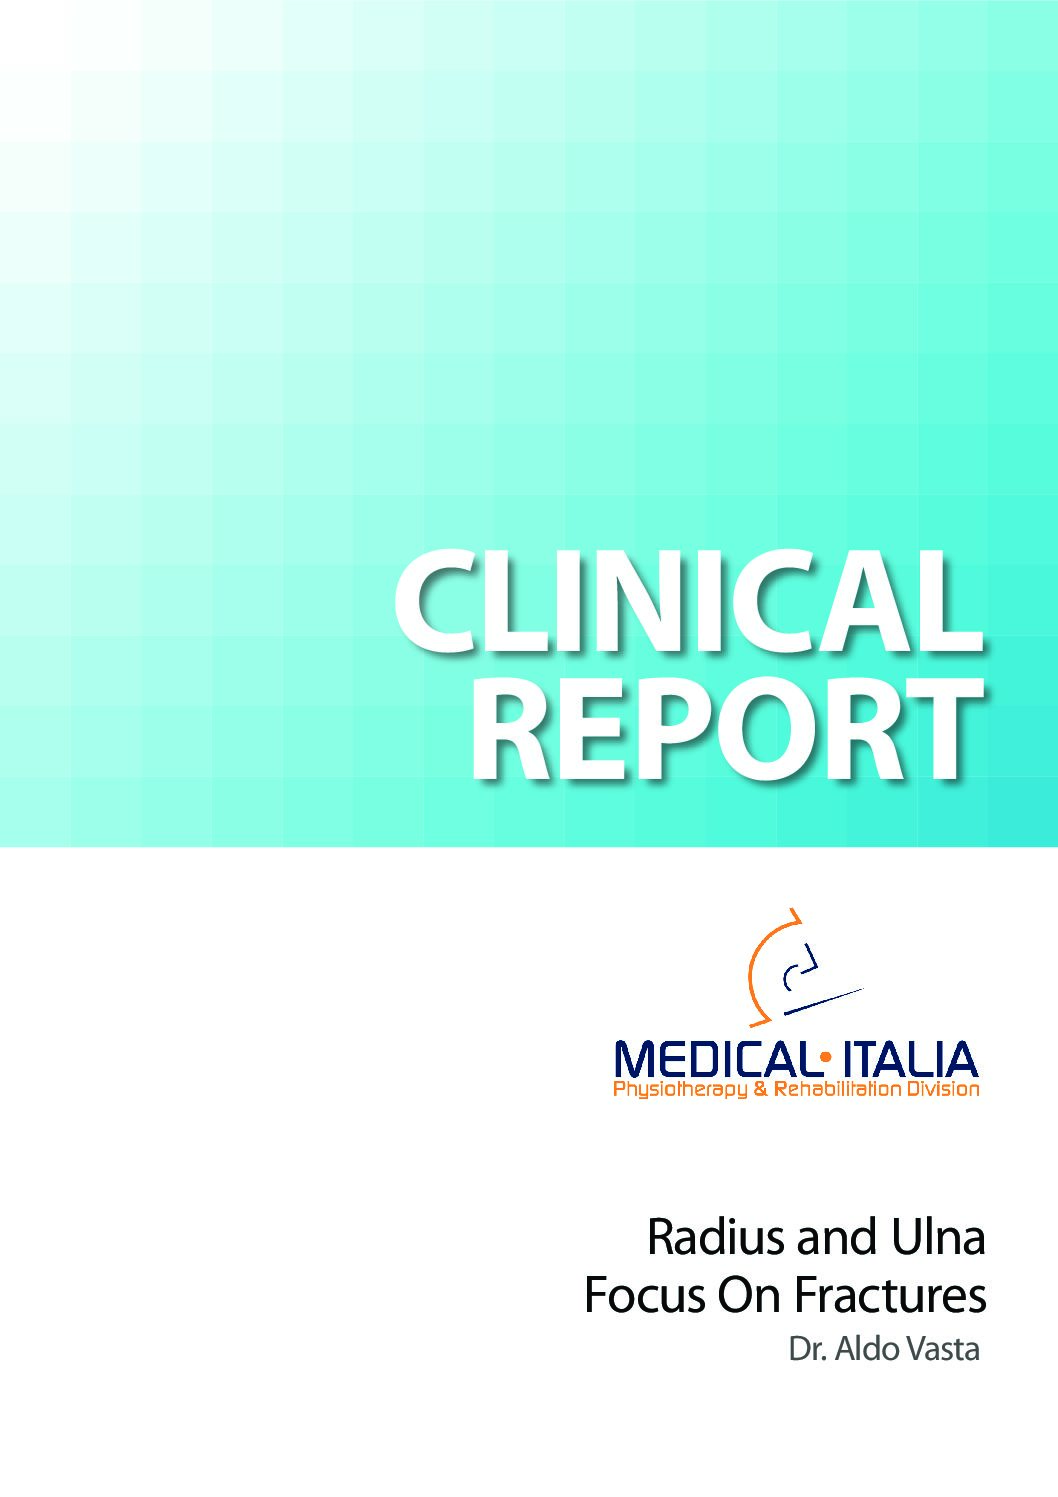 Clinical-Report_Magneto_Radius-and-Ulna_Vasta-pdf.jpg